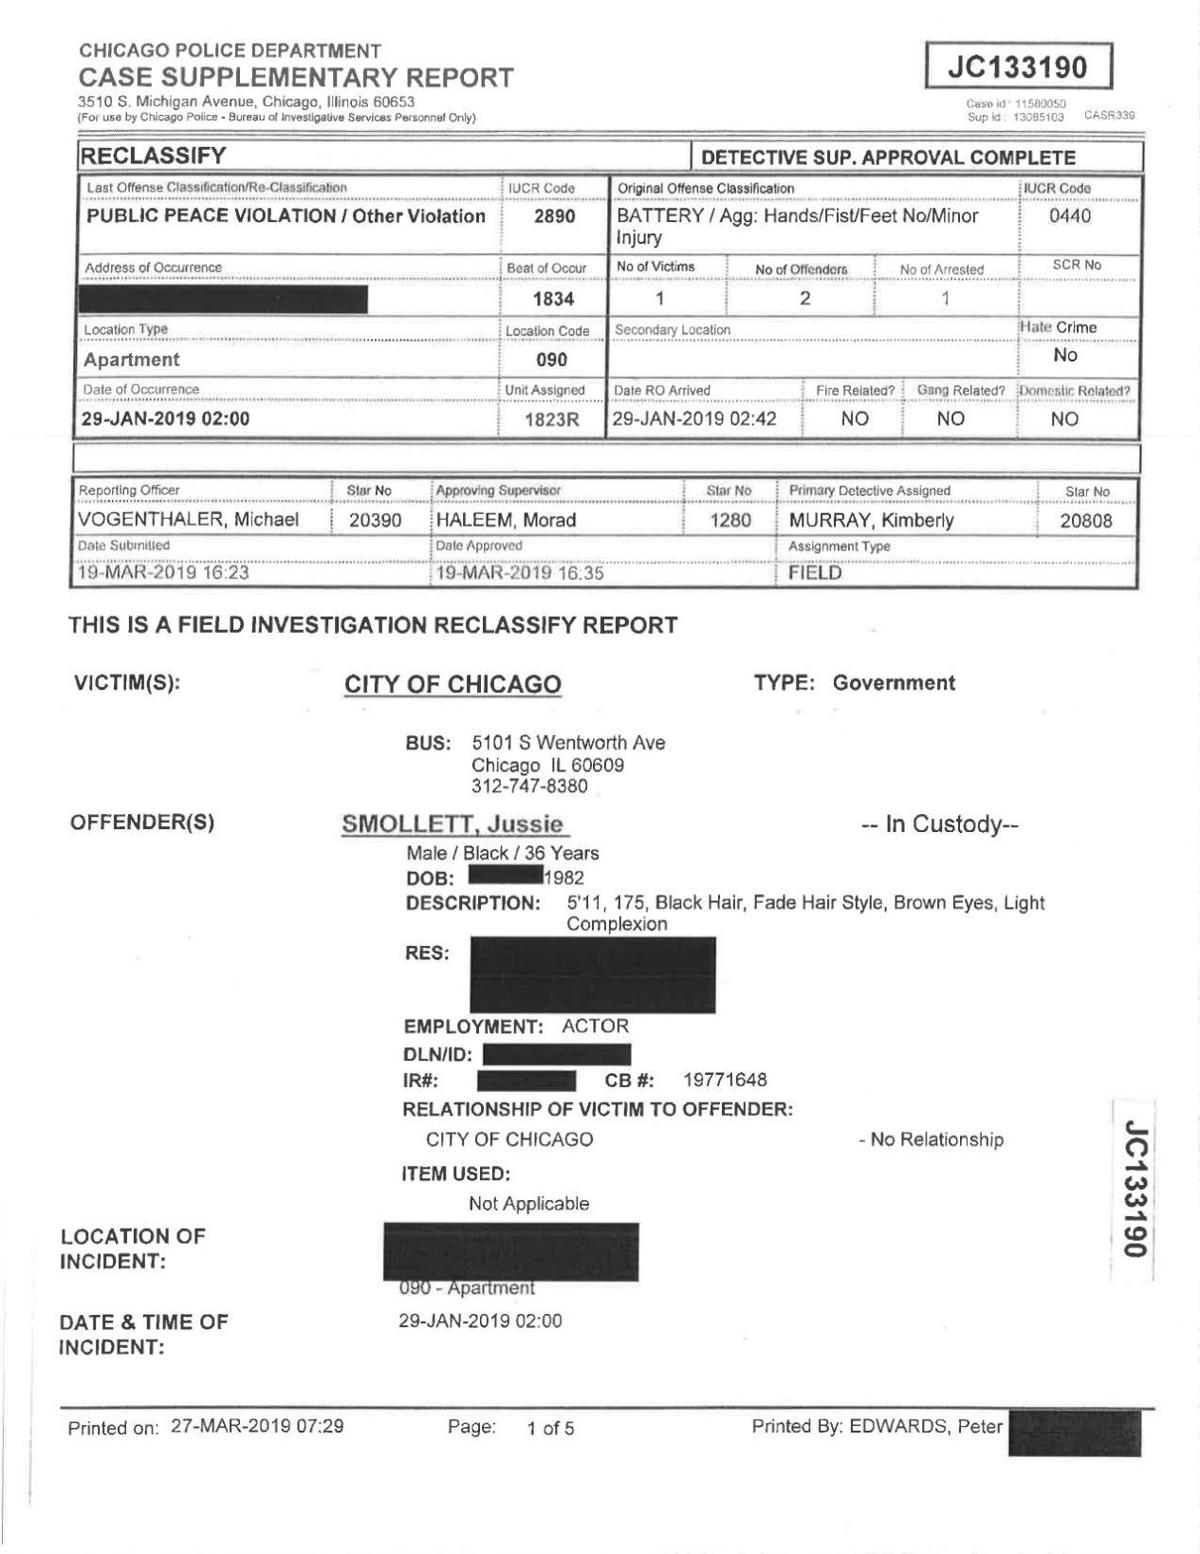 Chicago Police Department releases entire Jussie Smollett case file online | Regional ...